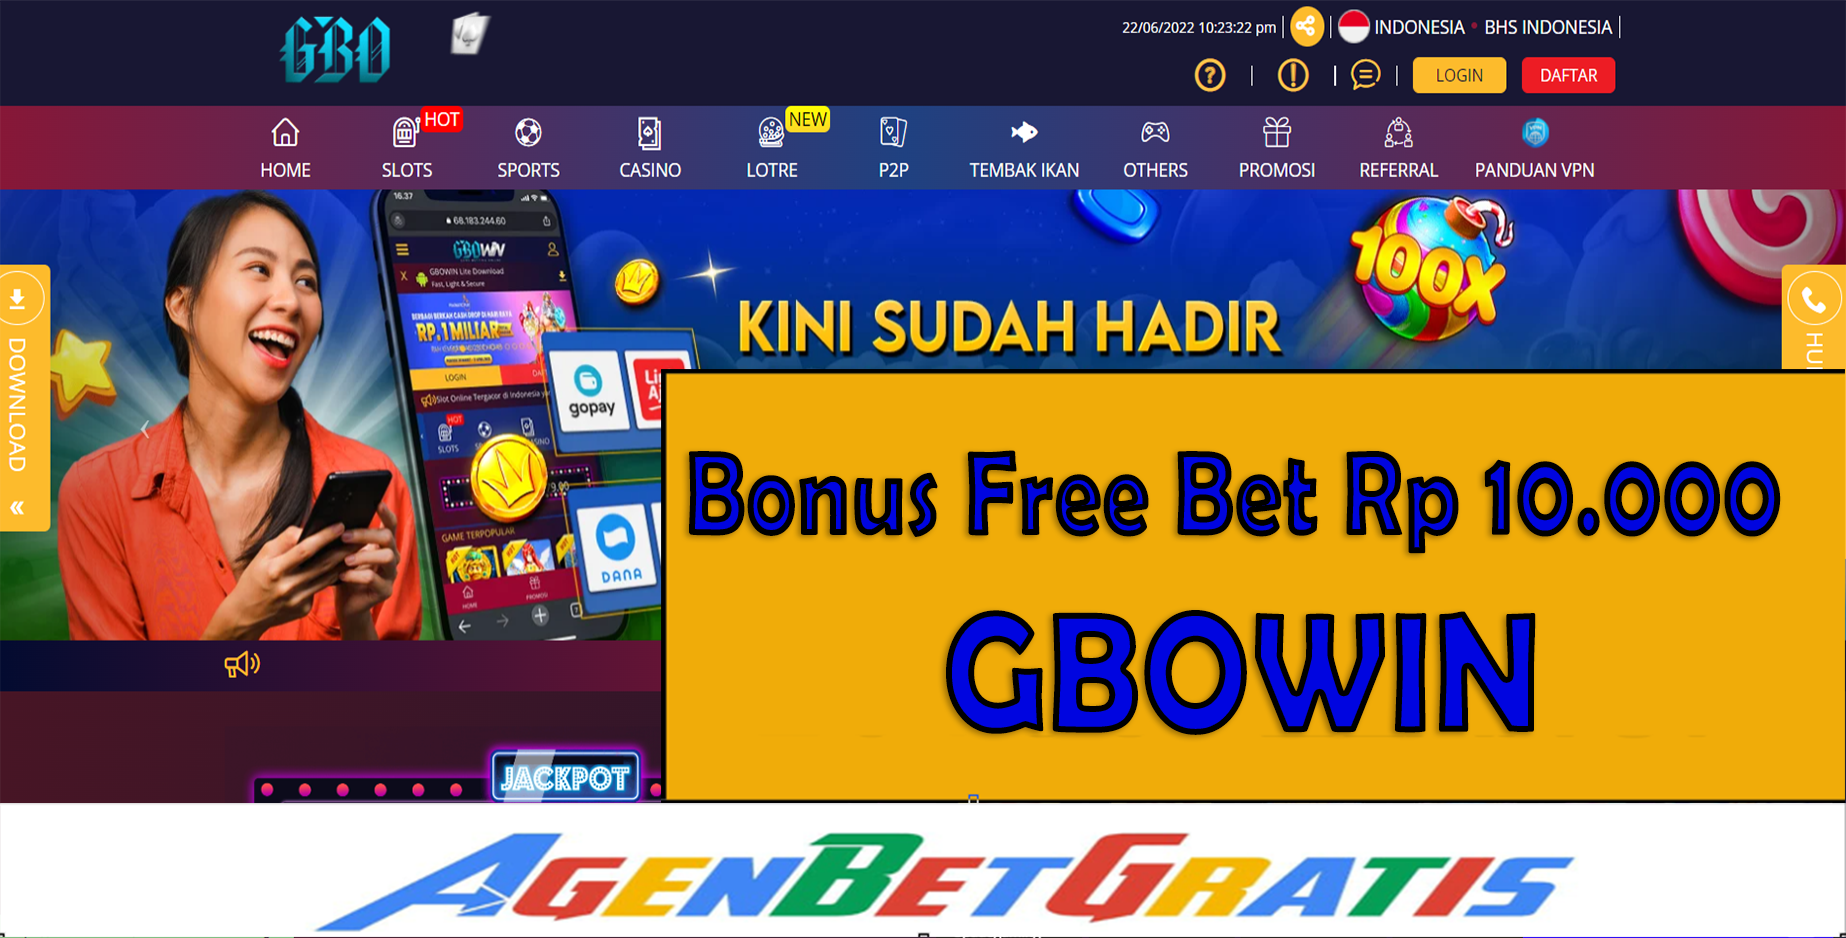 GBOWIN - Bonus FreeBet 10.000